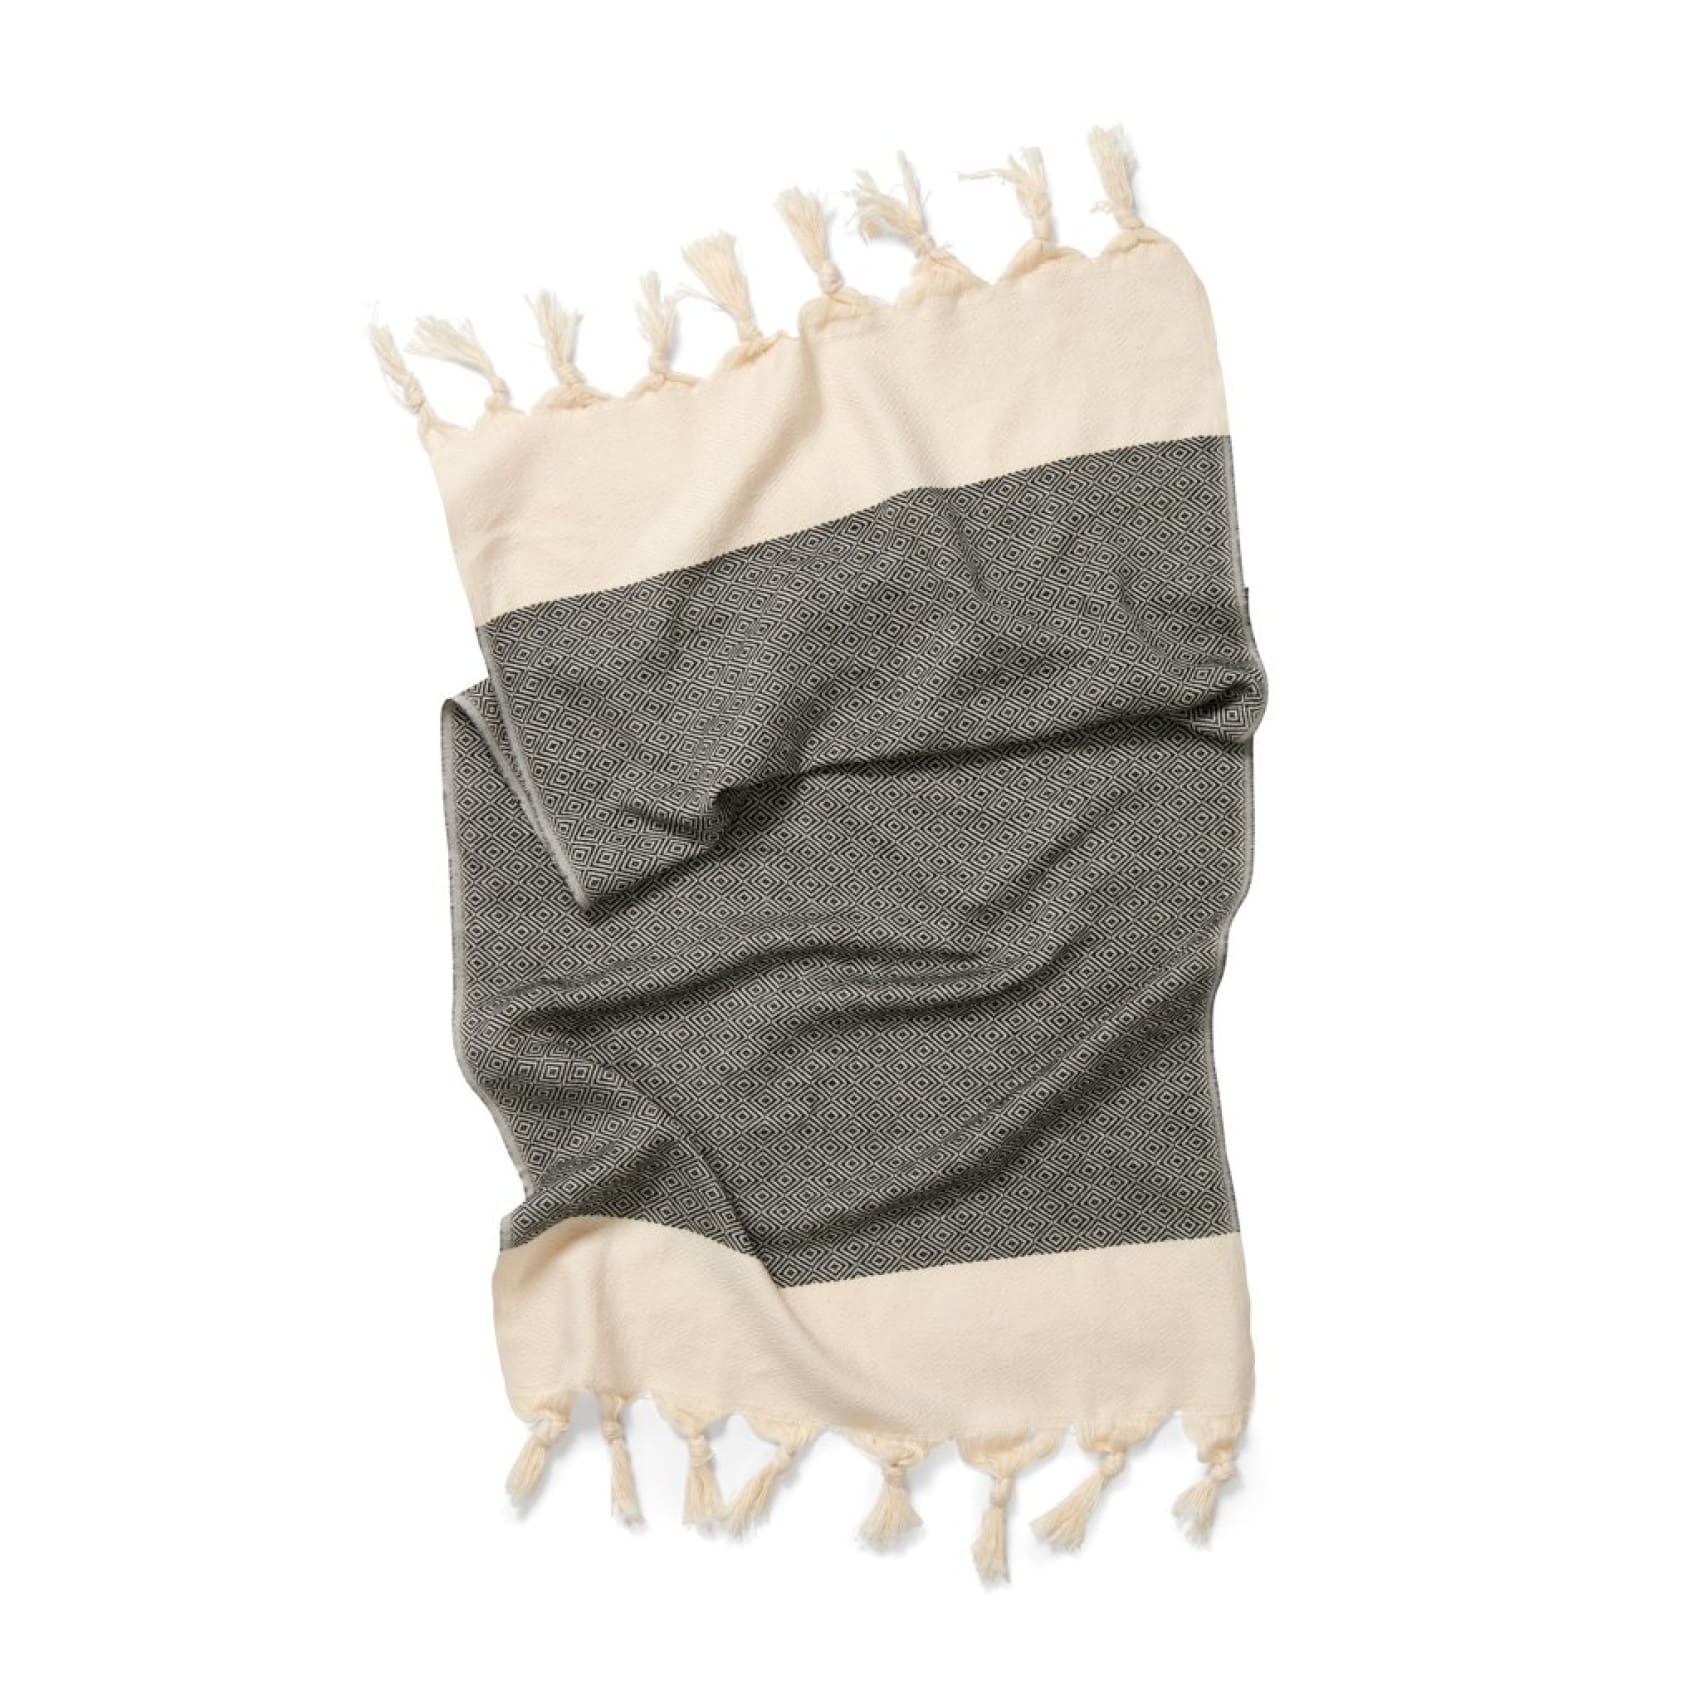 damla-hand-towels-black-bathroom-cotton-grey-towel-kitchen-luks-linen-glove-beige-wool-610.jpg